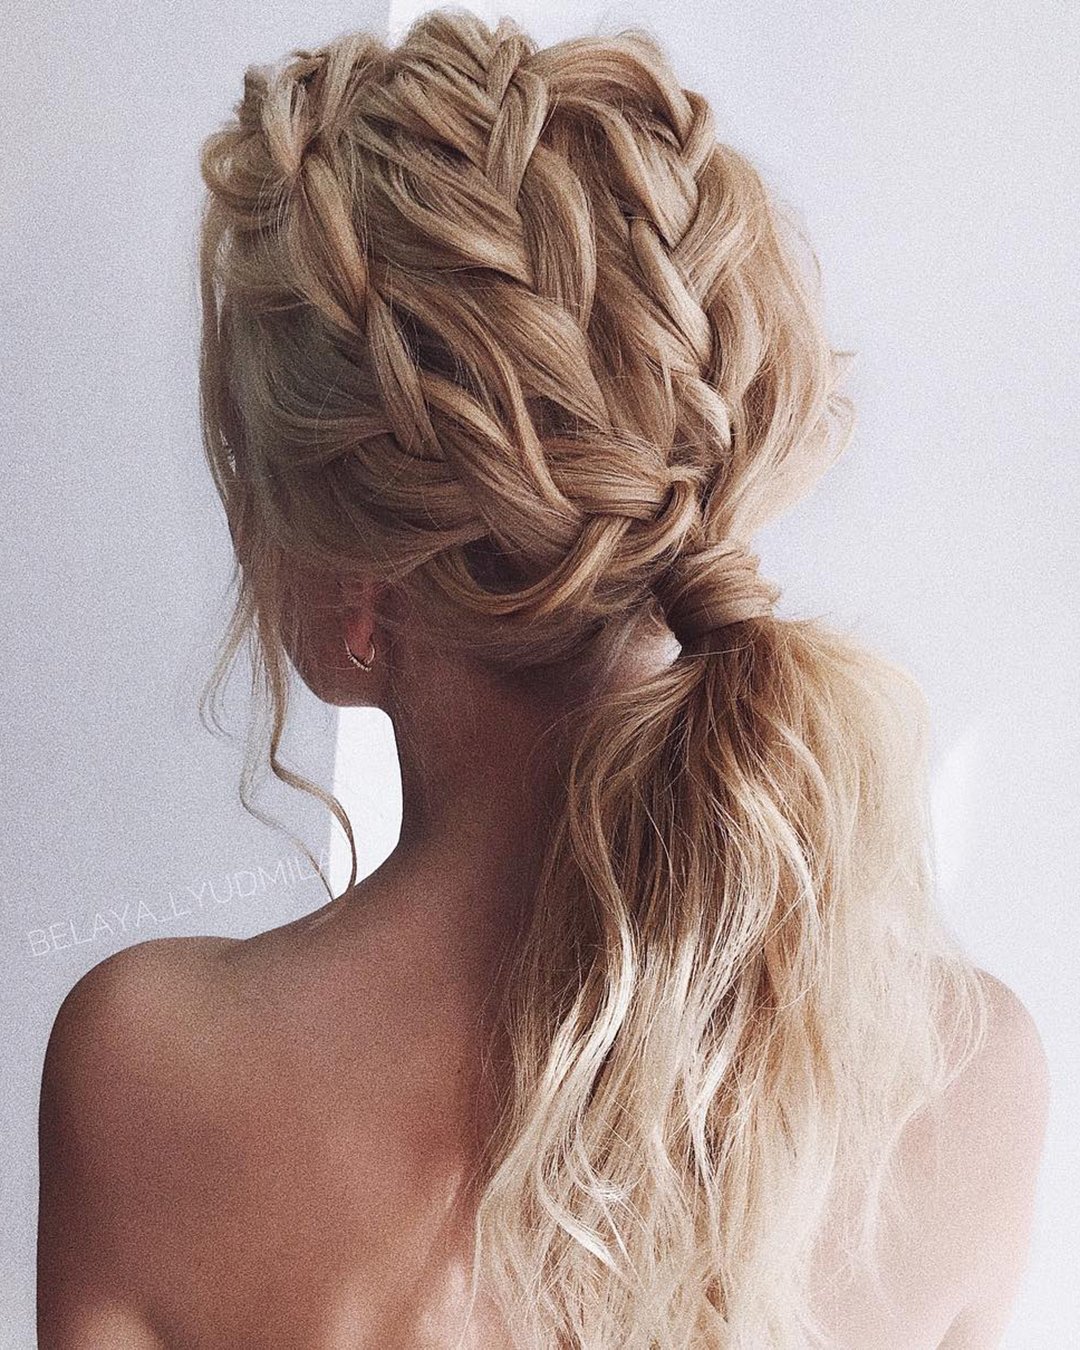 pony tail hairstyles textured braided low on blonde hair belaya_lyudmila